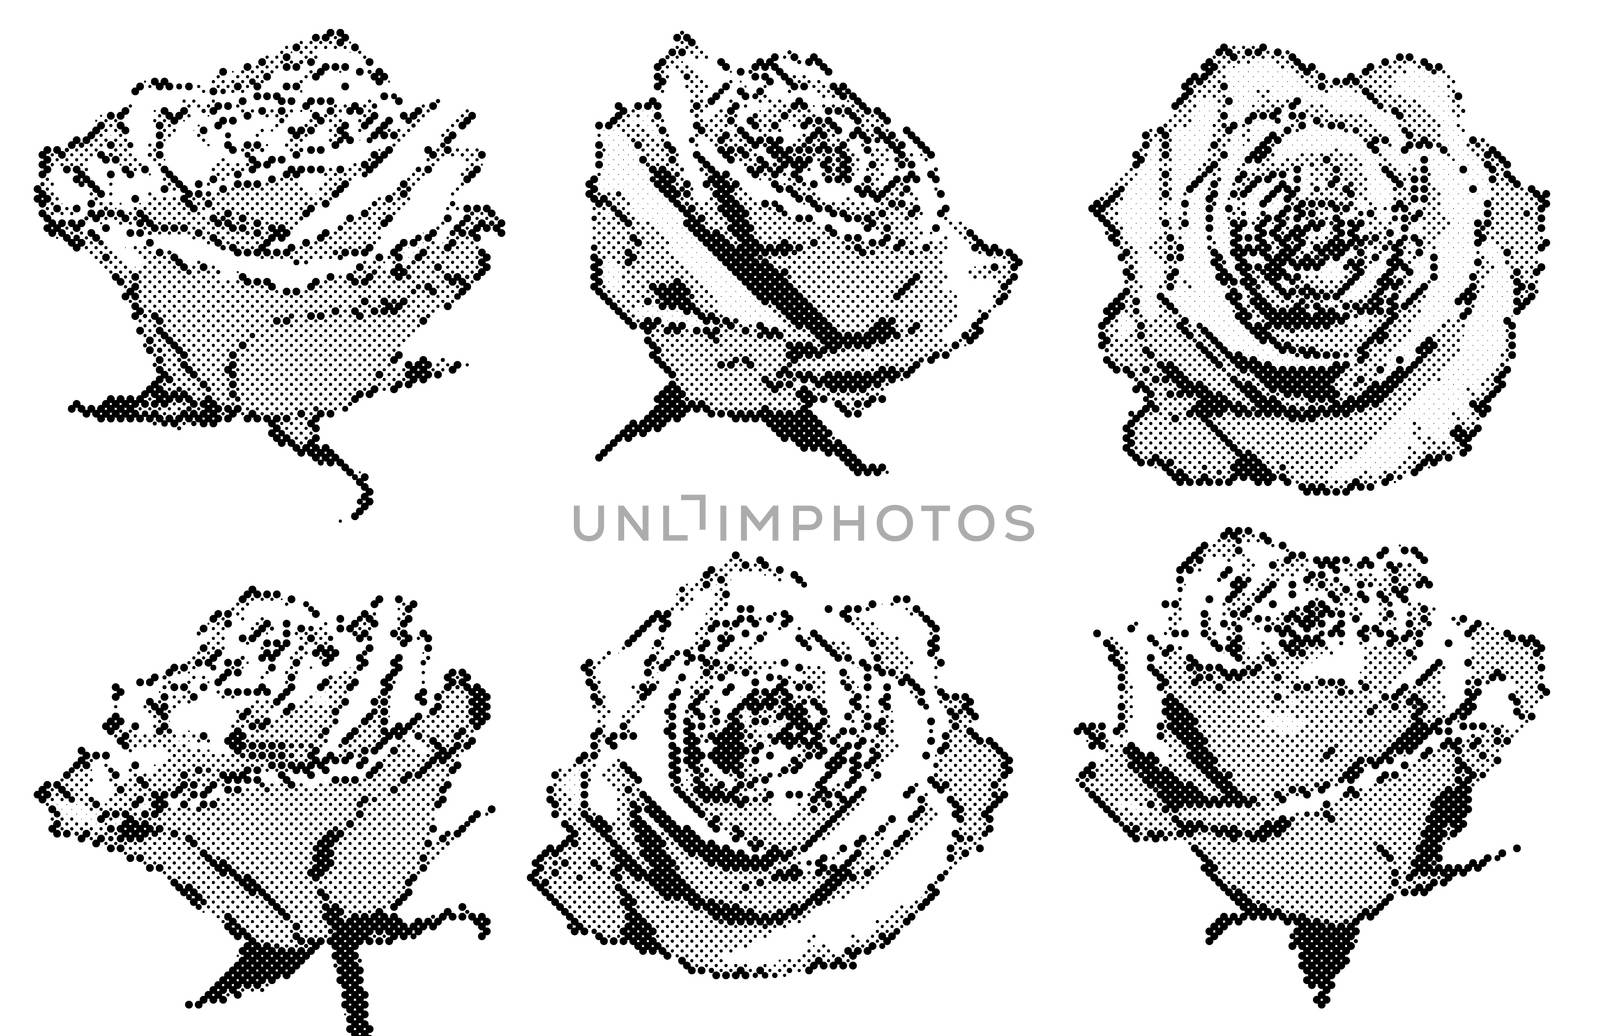 black and white halftone decorative roses illustrations